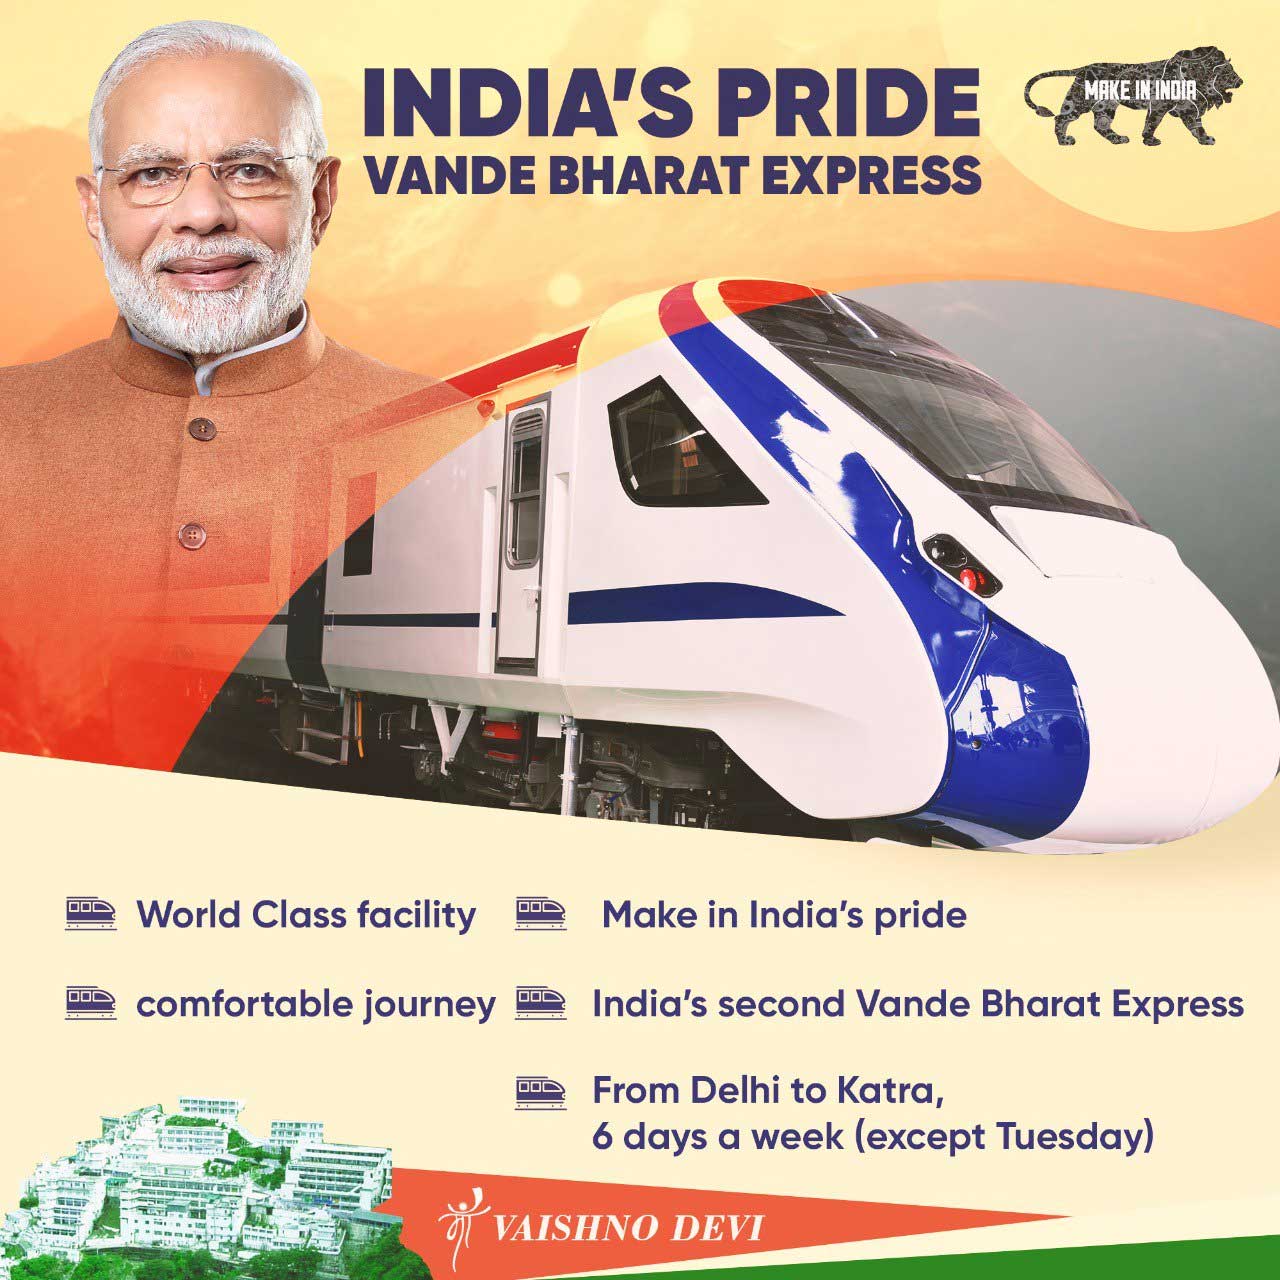 Vande Bharat Express realizes Gandhiji's vision of Swadeshi and fillips Narendra Modi's Make in India